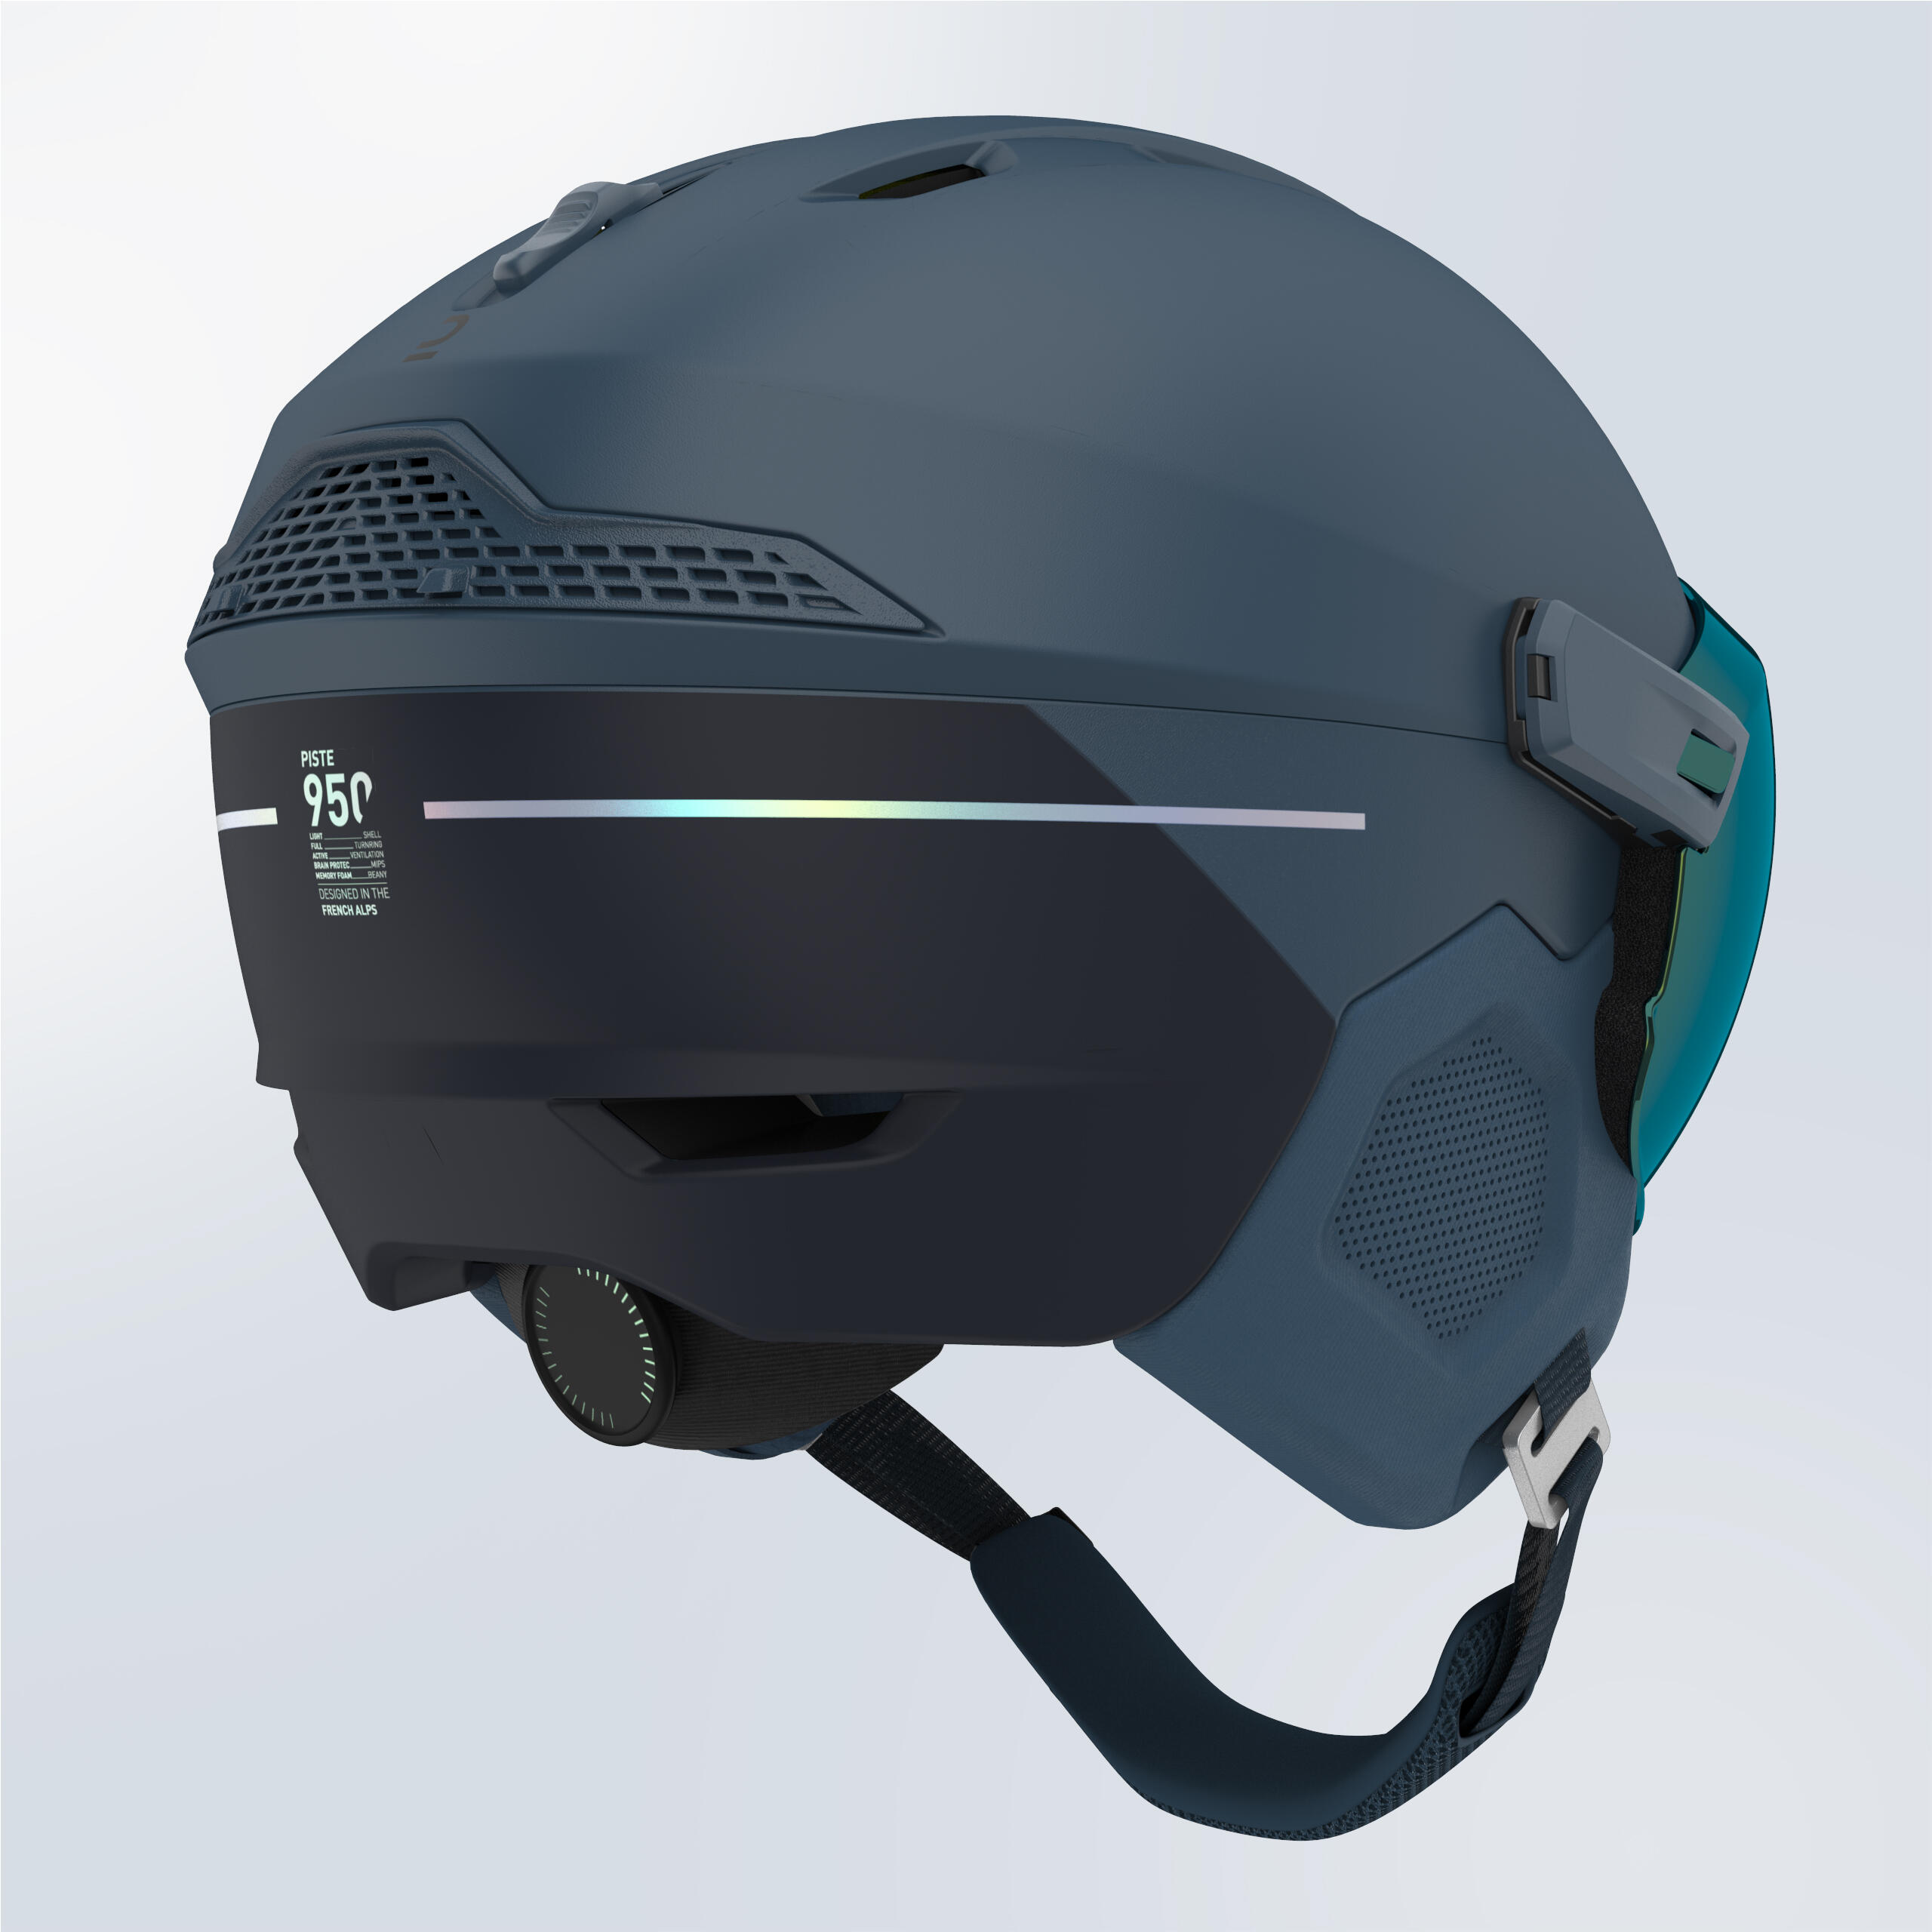 PST 950 MIPS Adult ski helmet with visor - blue  4/9